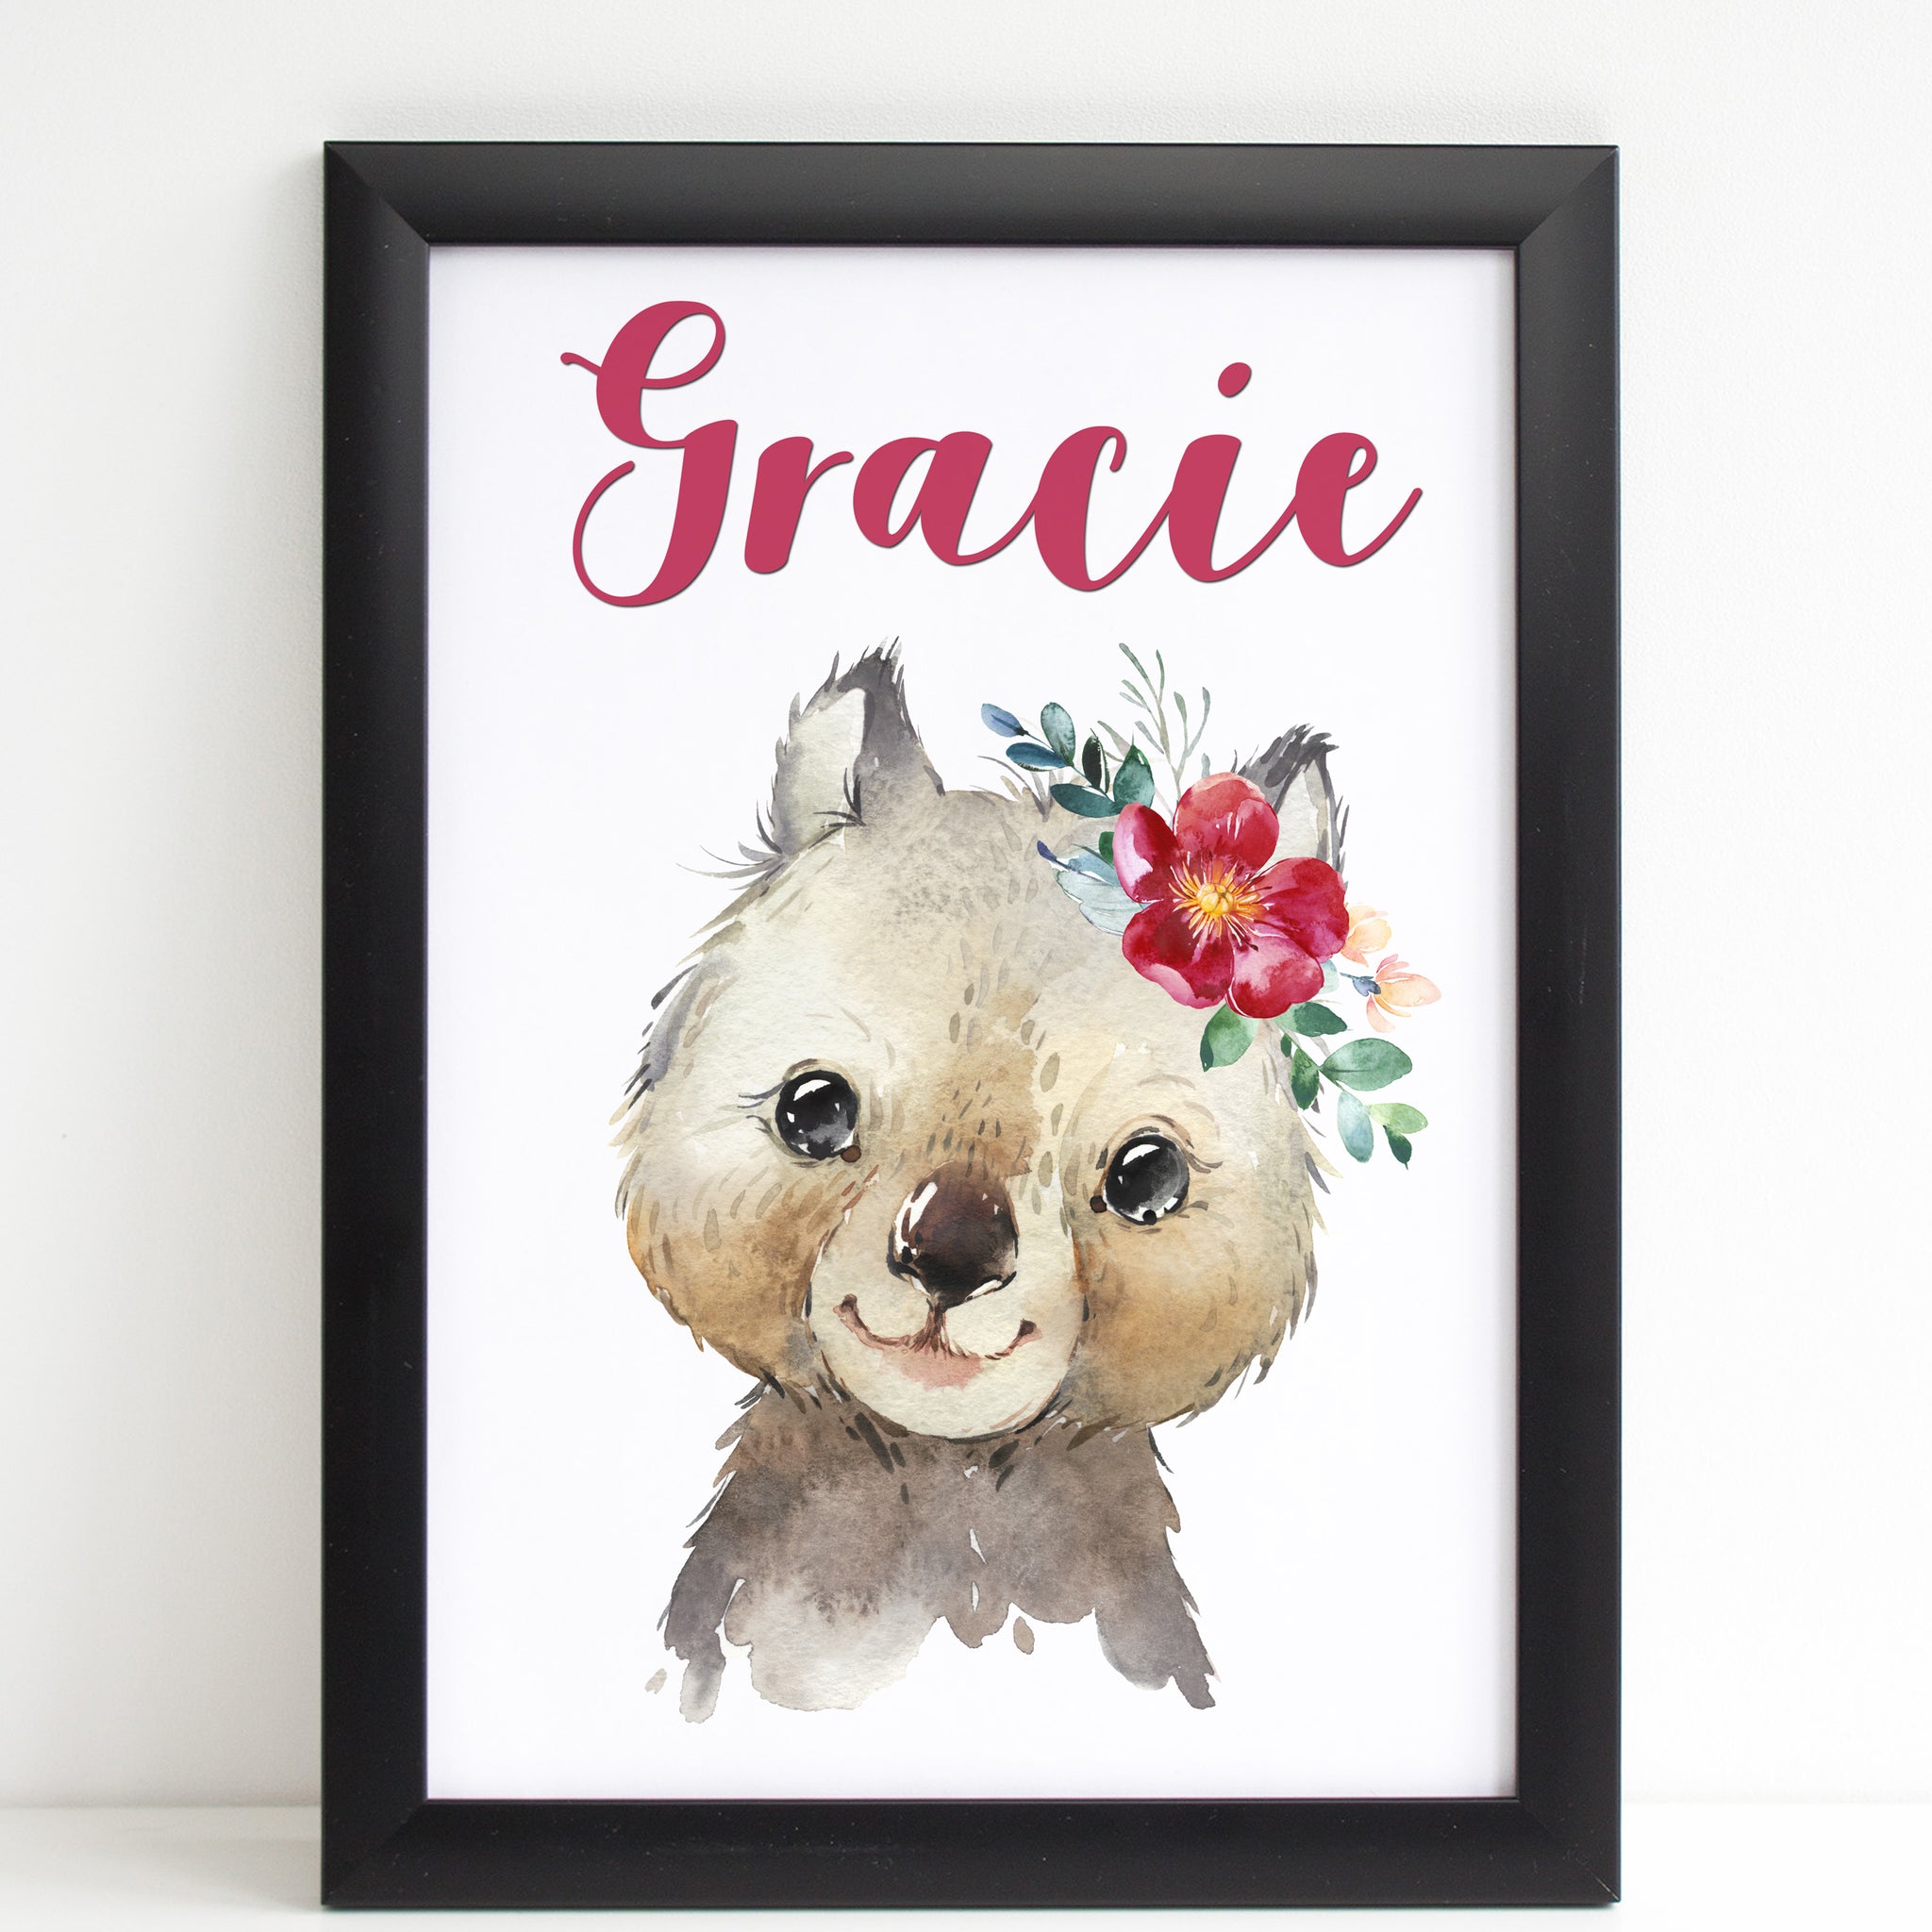 Baby Wombat Print, Cute Personalised Animal Print for Kids